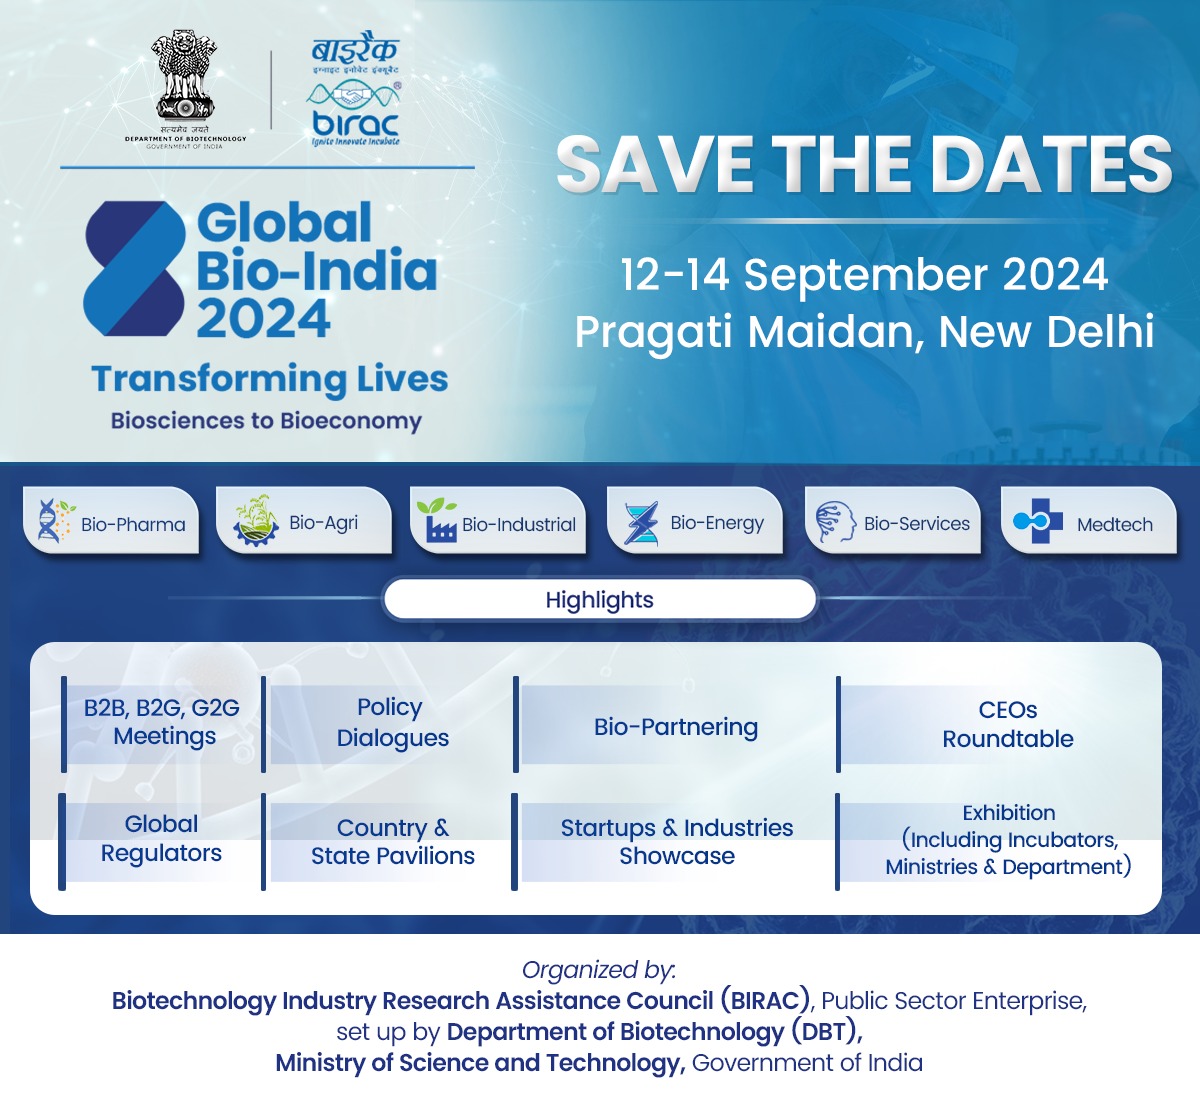 !! GLOBAL BIO-INDIA 2024 !! SAVE THE DATES: 12-14 September, 2024 Pragati Maidan, New Delhi Get ready for the biggest congregation of biotech stakeholders. #Biotech #GlobalBioIndia2024 @DBTIndia @BIRAC_2012